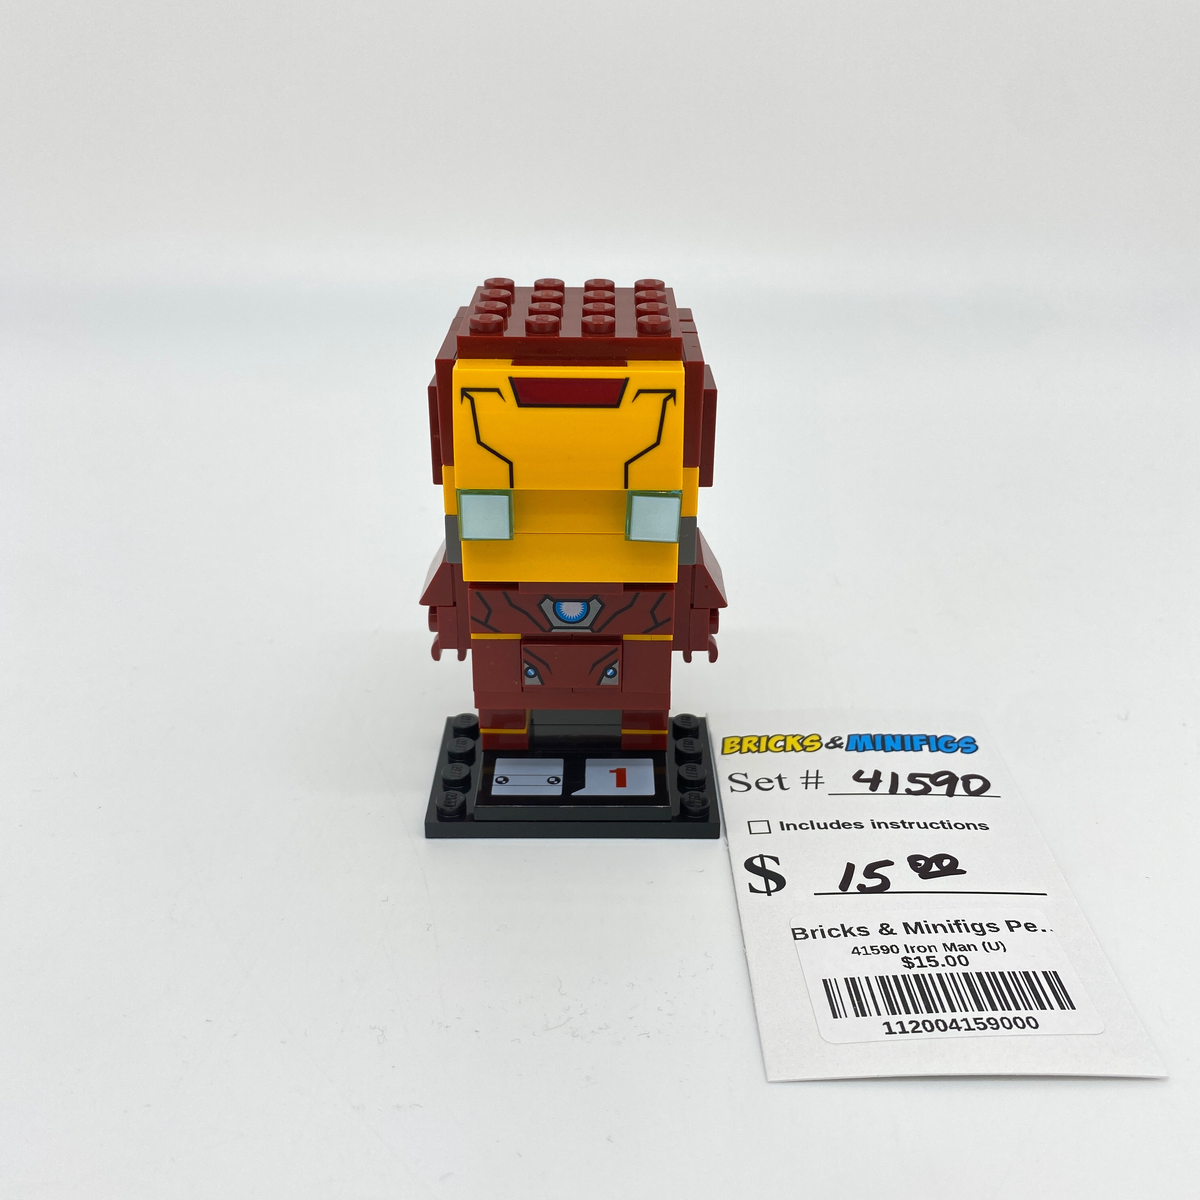 Anonym Overholdelse af Bukser 41590 Iron Man (U) – Bricks & Minifigs - Pearland